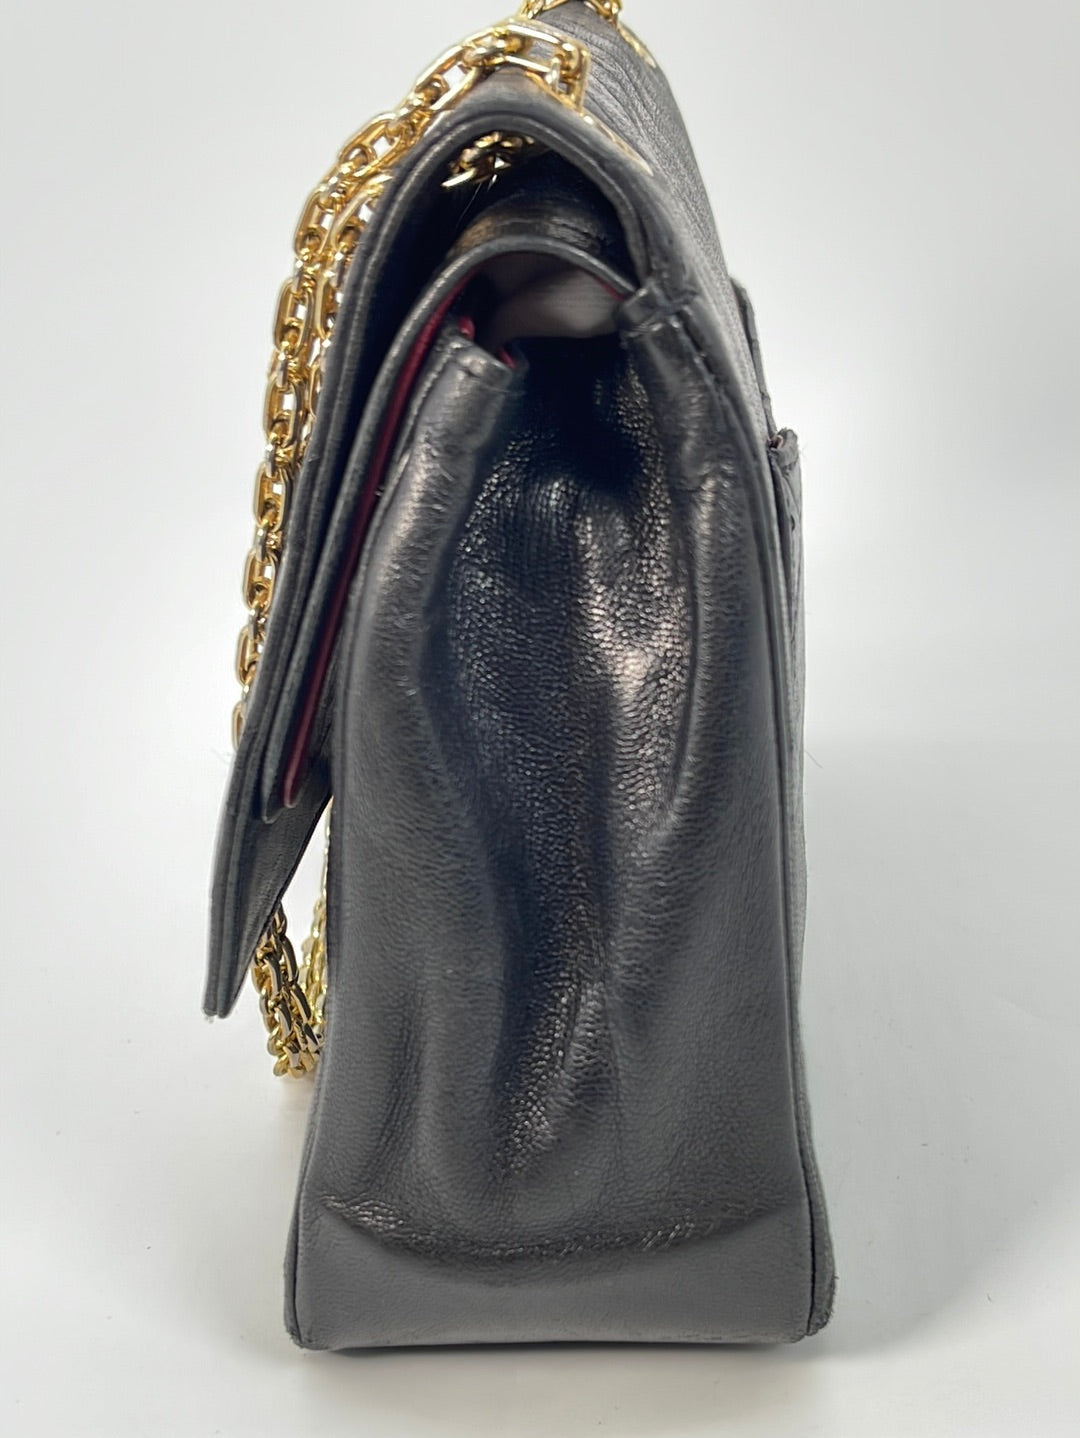 PRELOVED Chanel Quilted Black Lambskin Double Flap Chain Shoulder Bag BKCBRJD 030123 - $300 OFF LIGHTENING DEAL